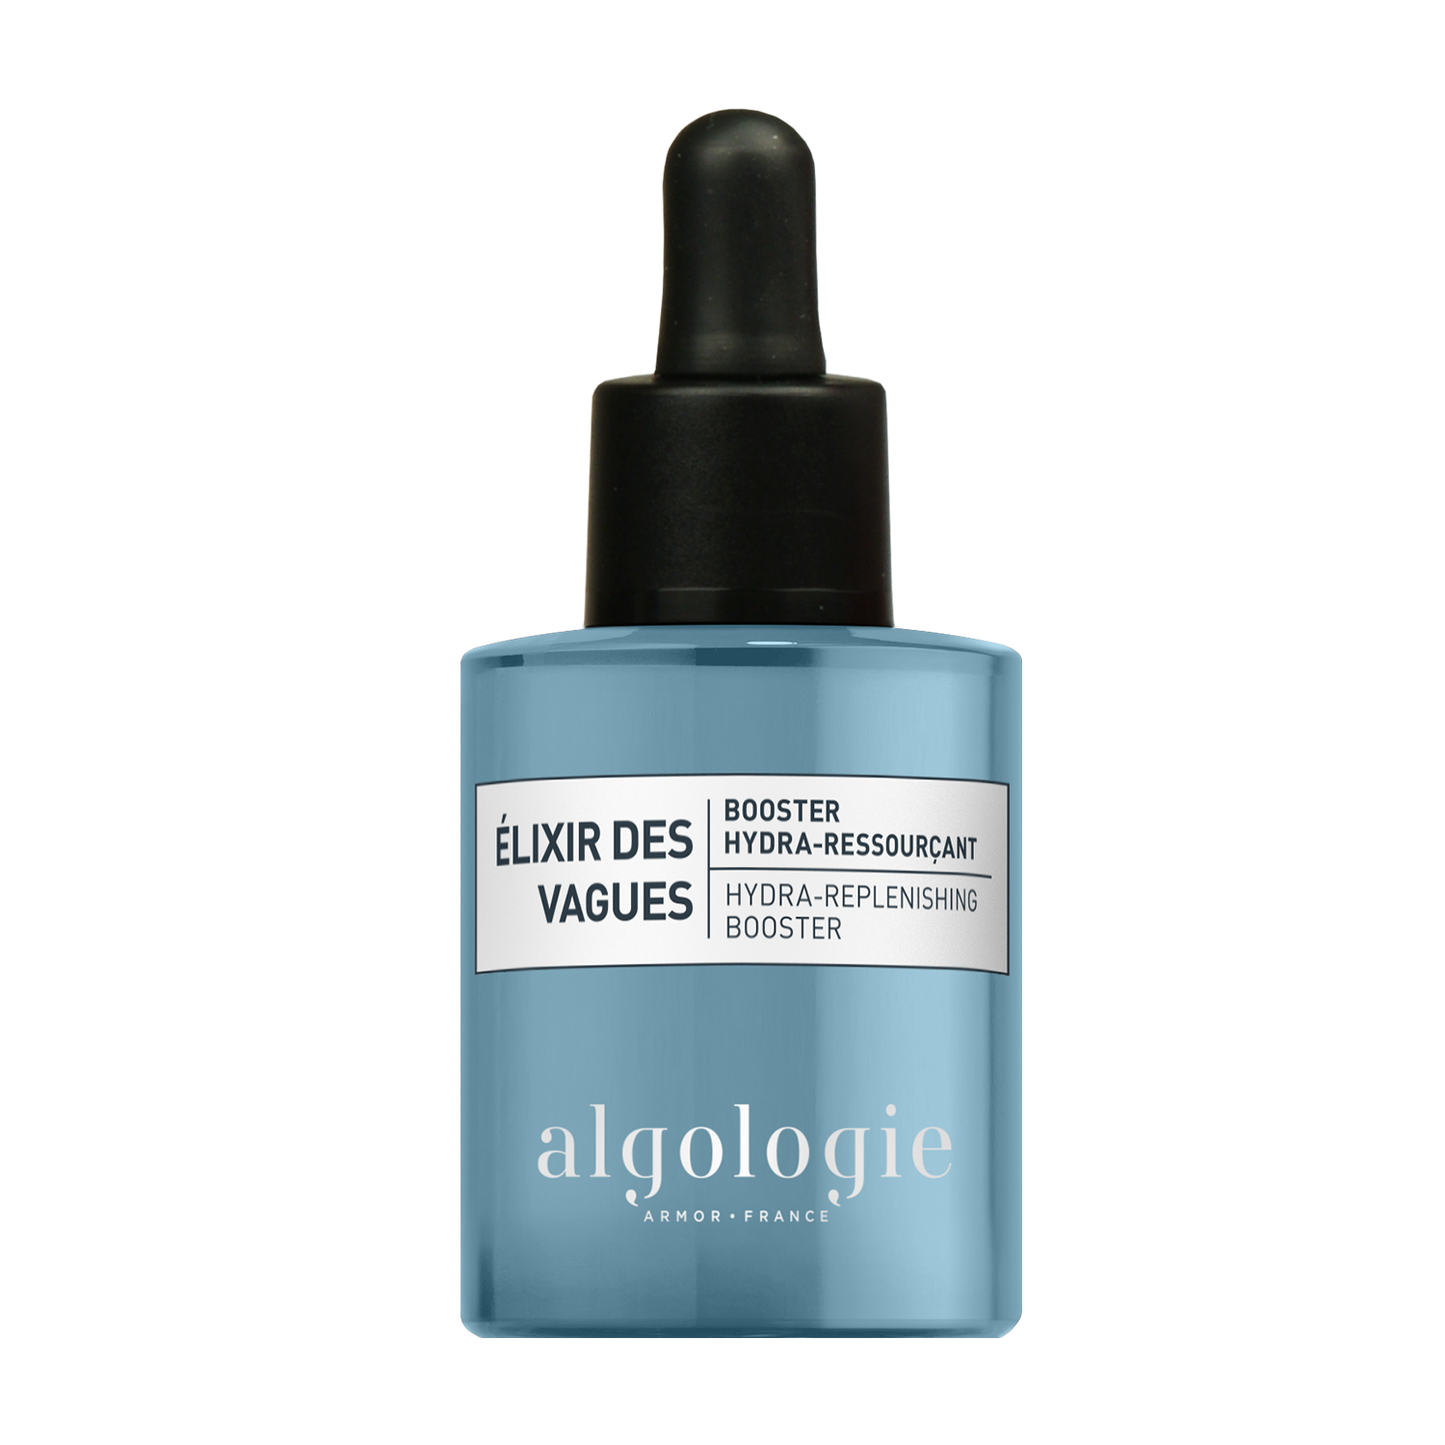 Algologie Hydra-Replenishing Booster